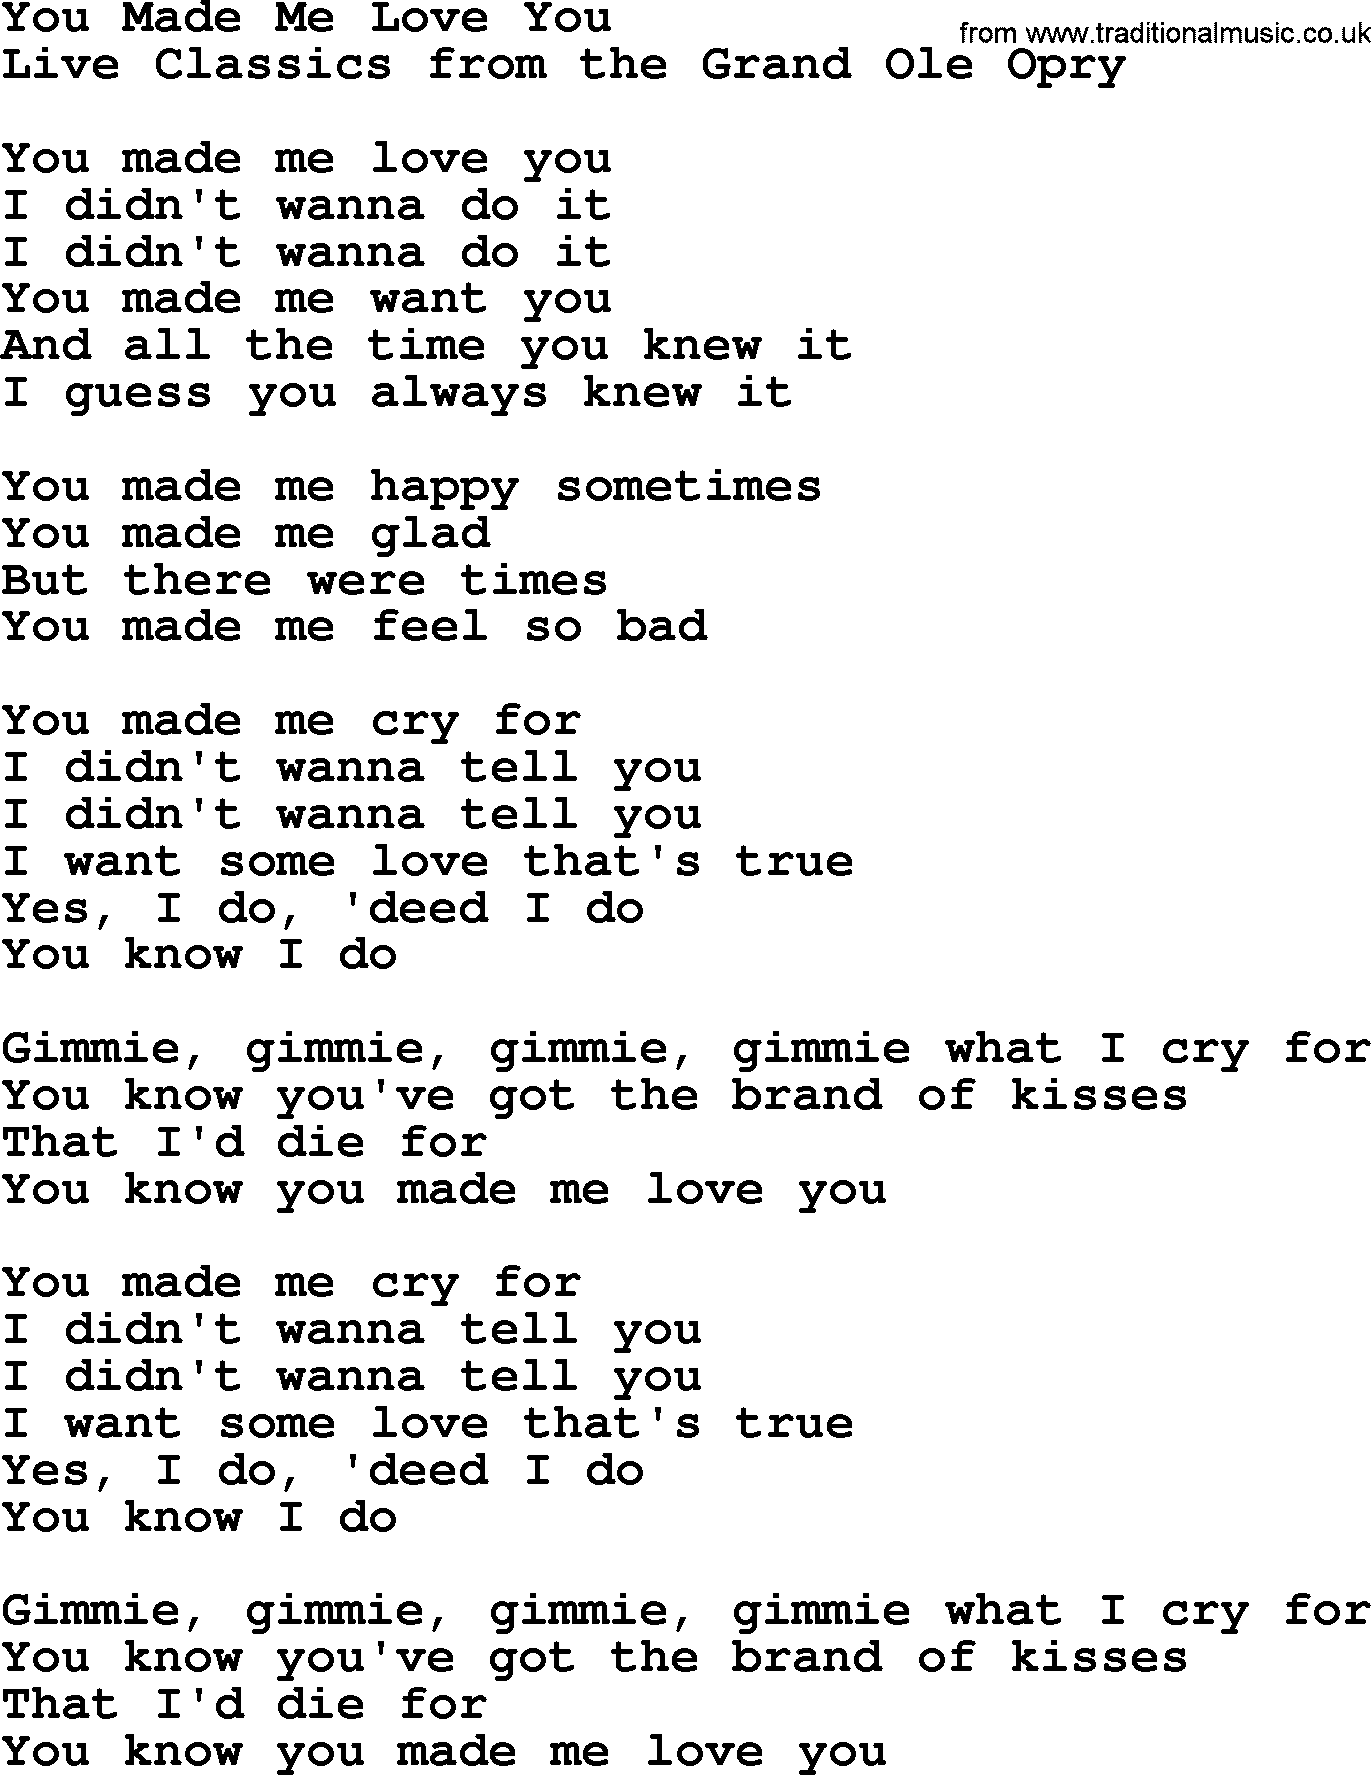 Marty Robbins song: You Made Me Love You, lyrics